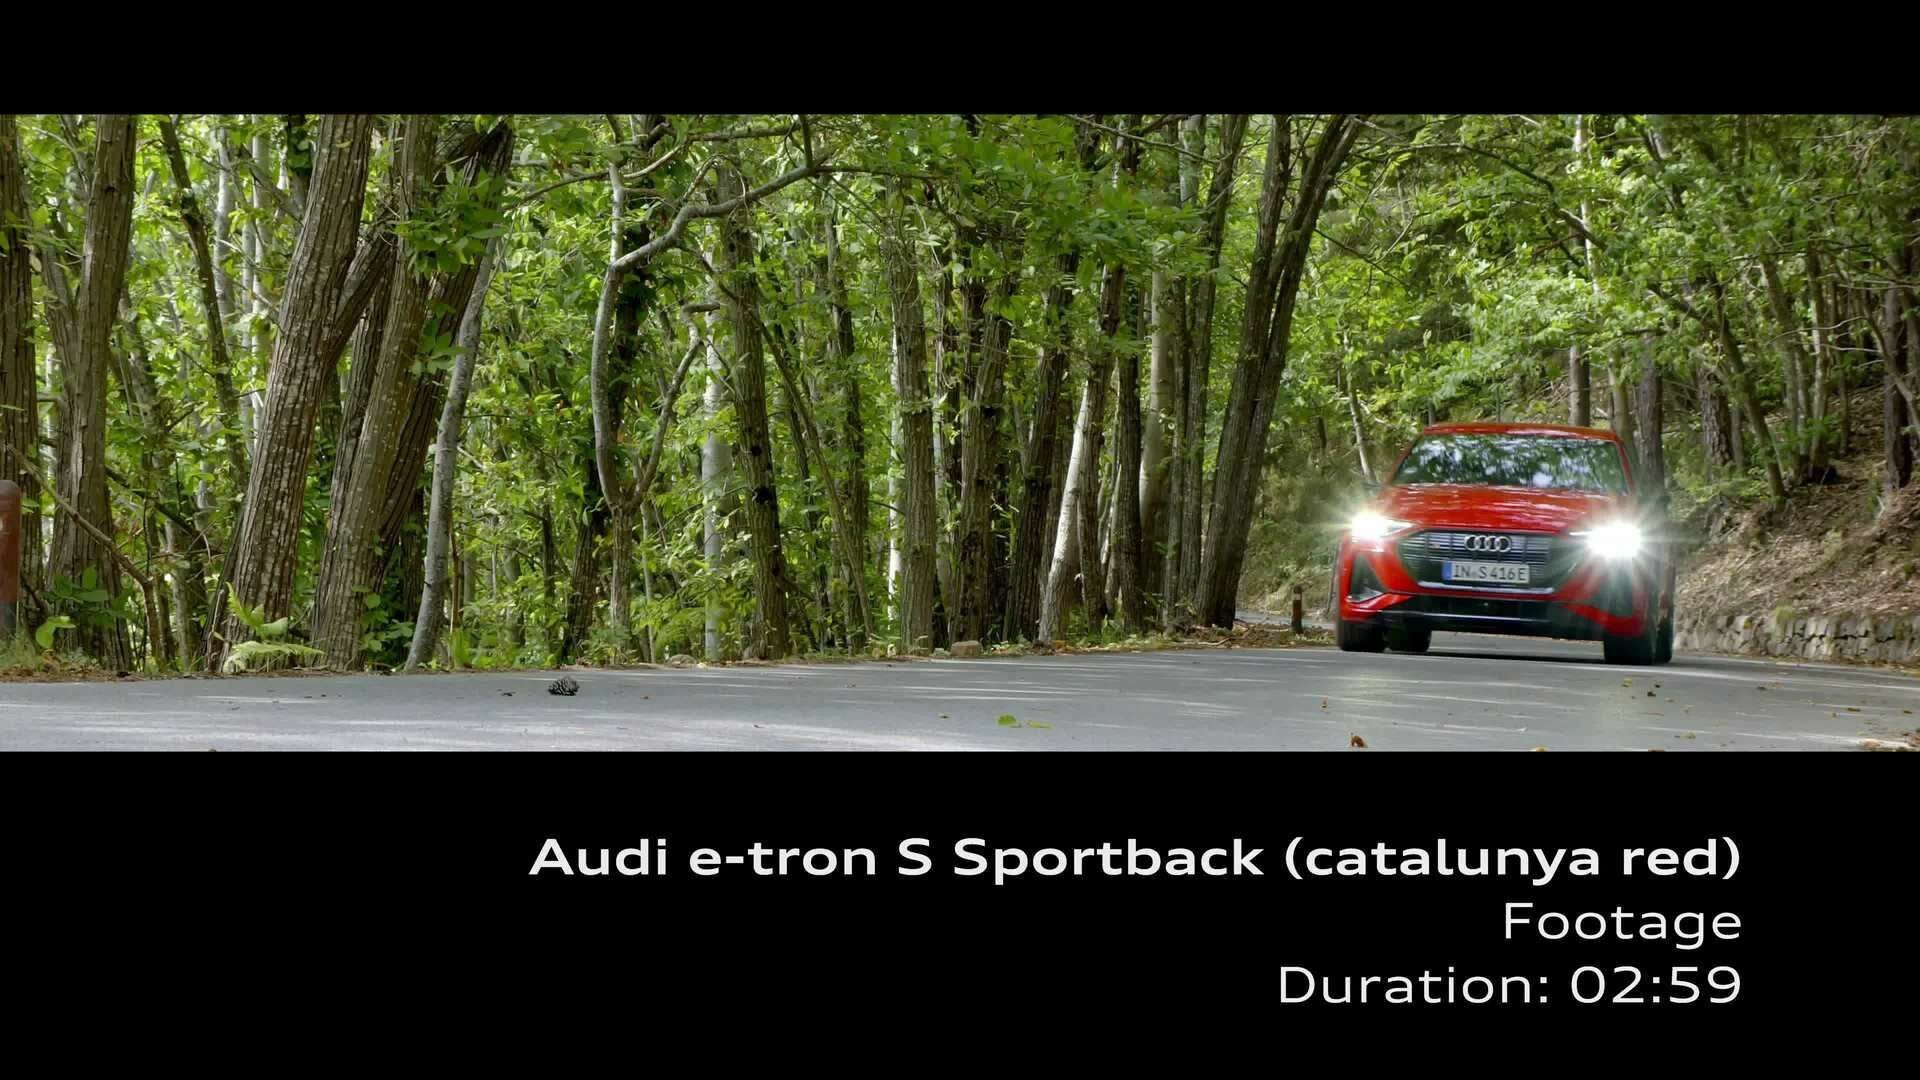 Footage: Audi e-tron S Sportback Catalunya red